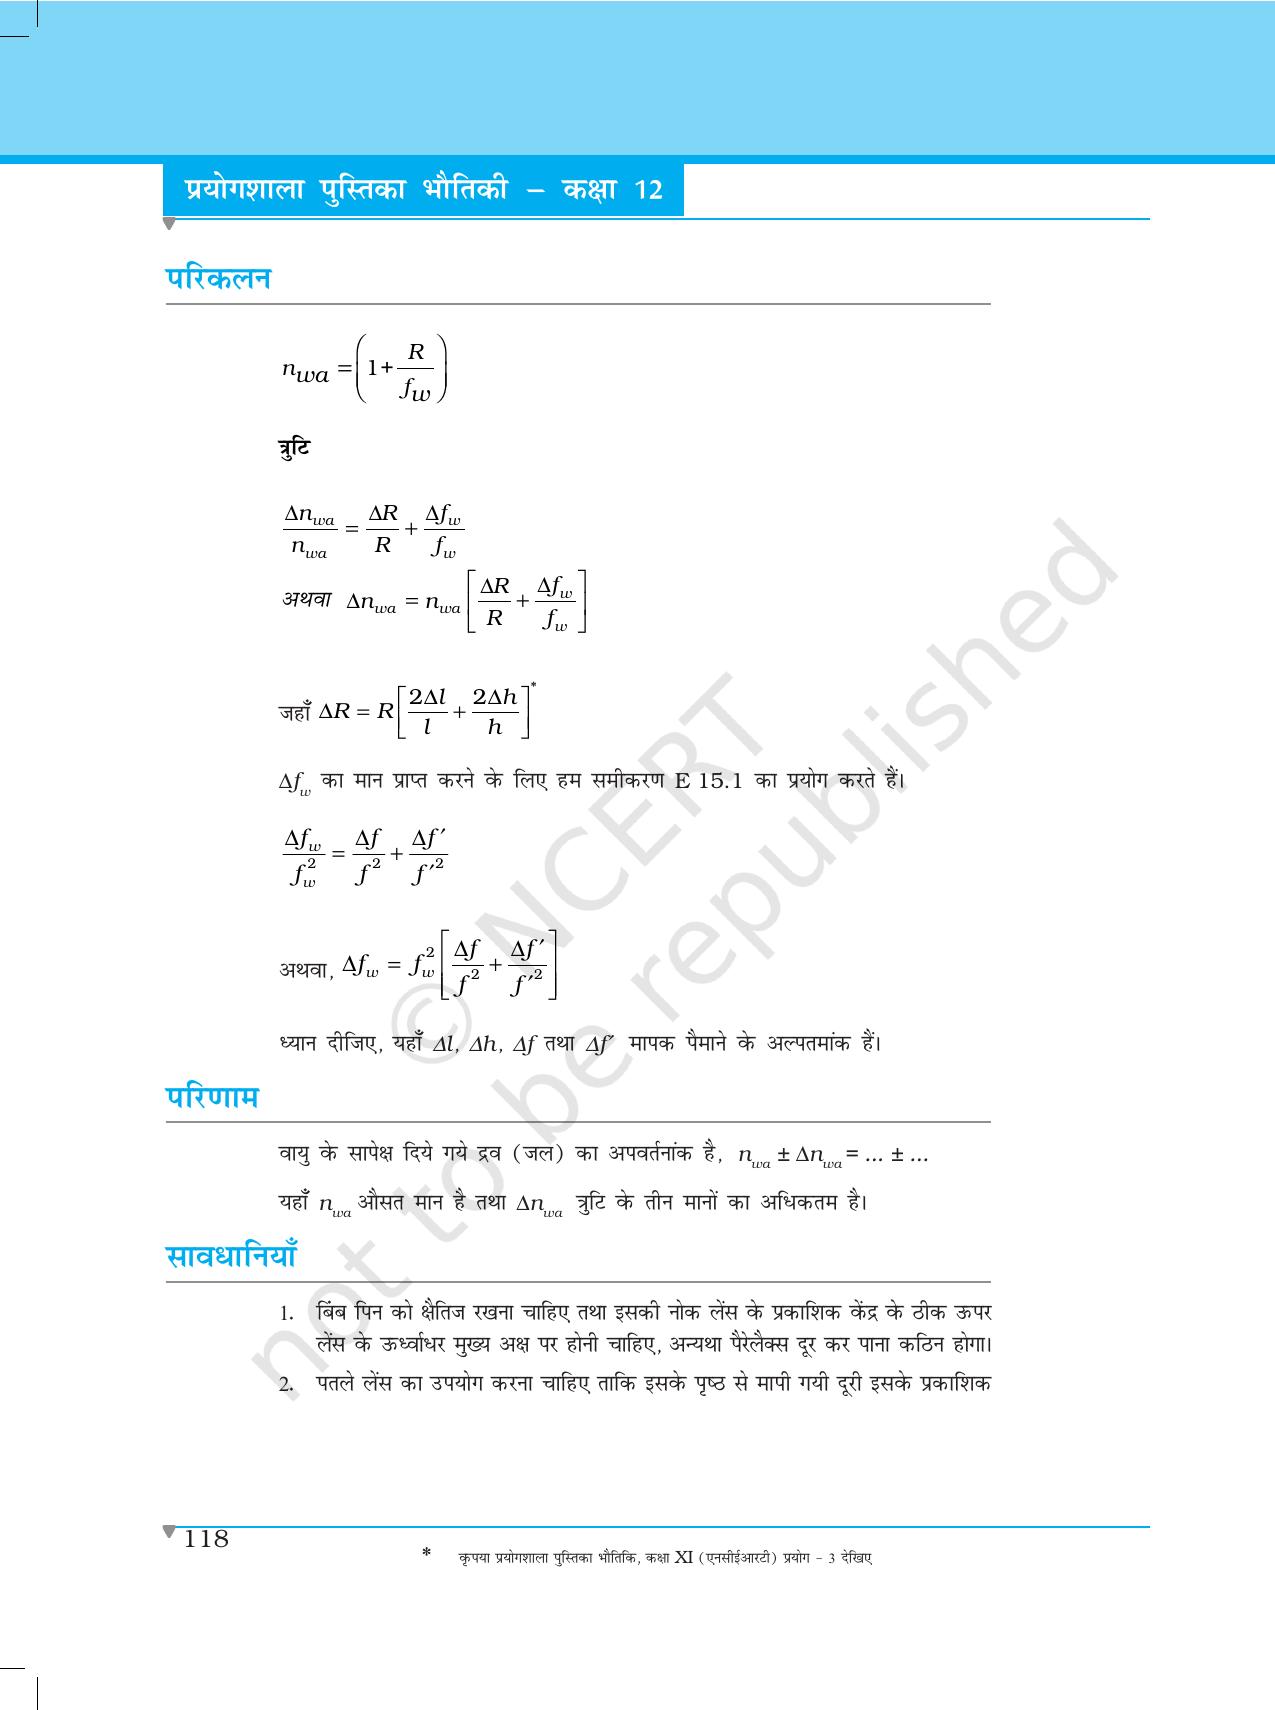 NCERT Laboratory Manuals for Class XII भौतिकी - प्रयोग (14 - 18) - Page 14